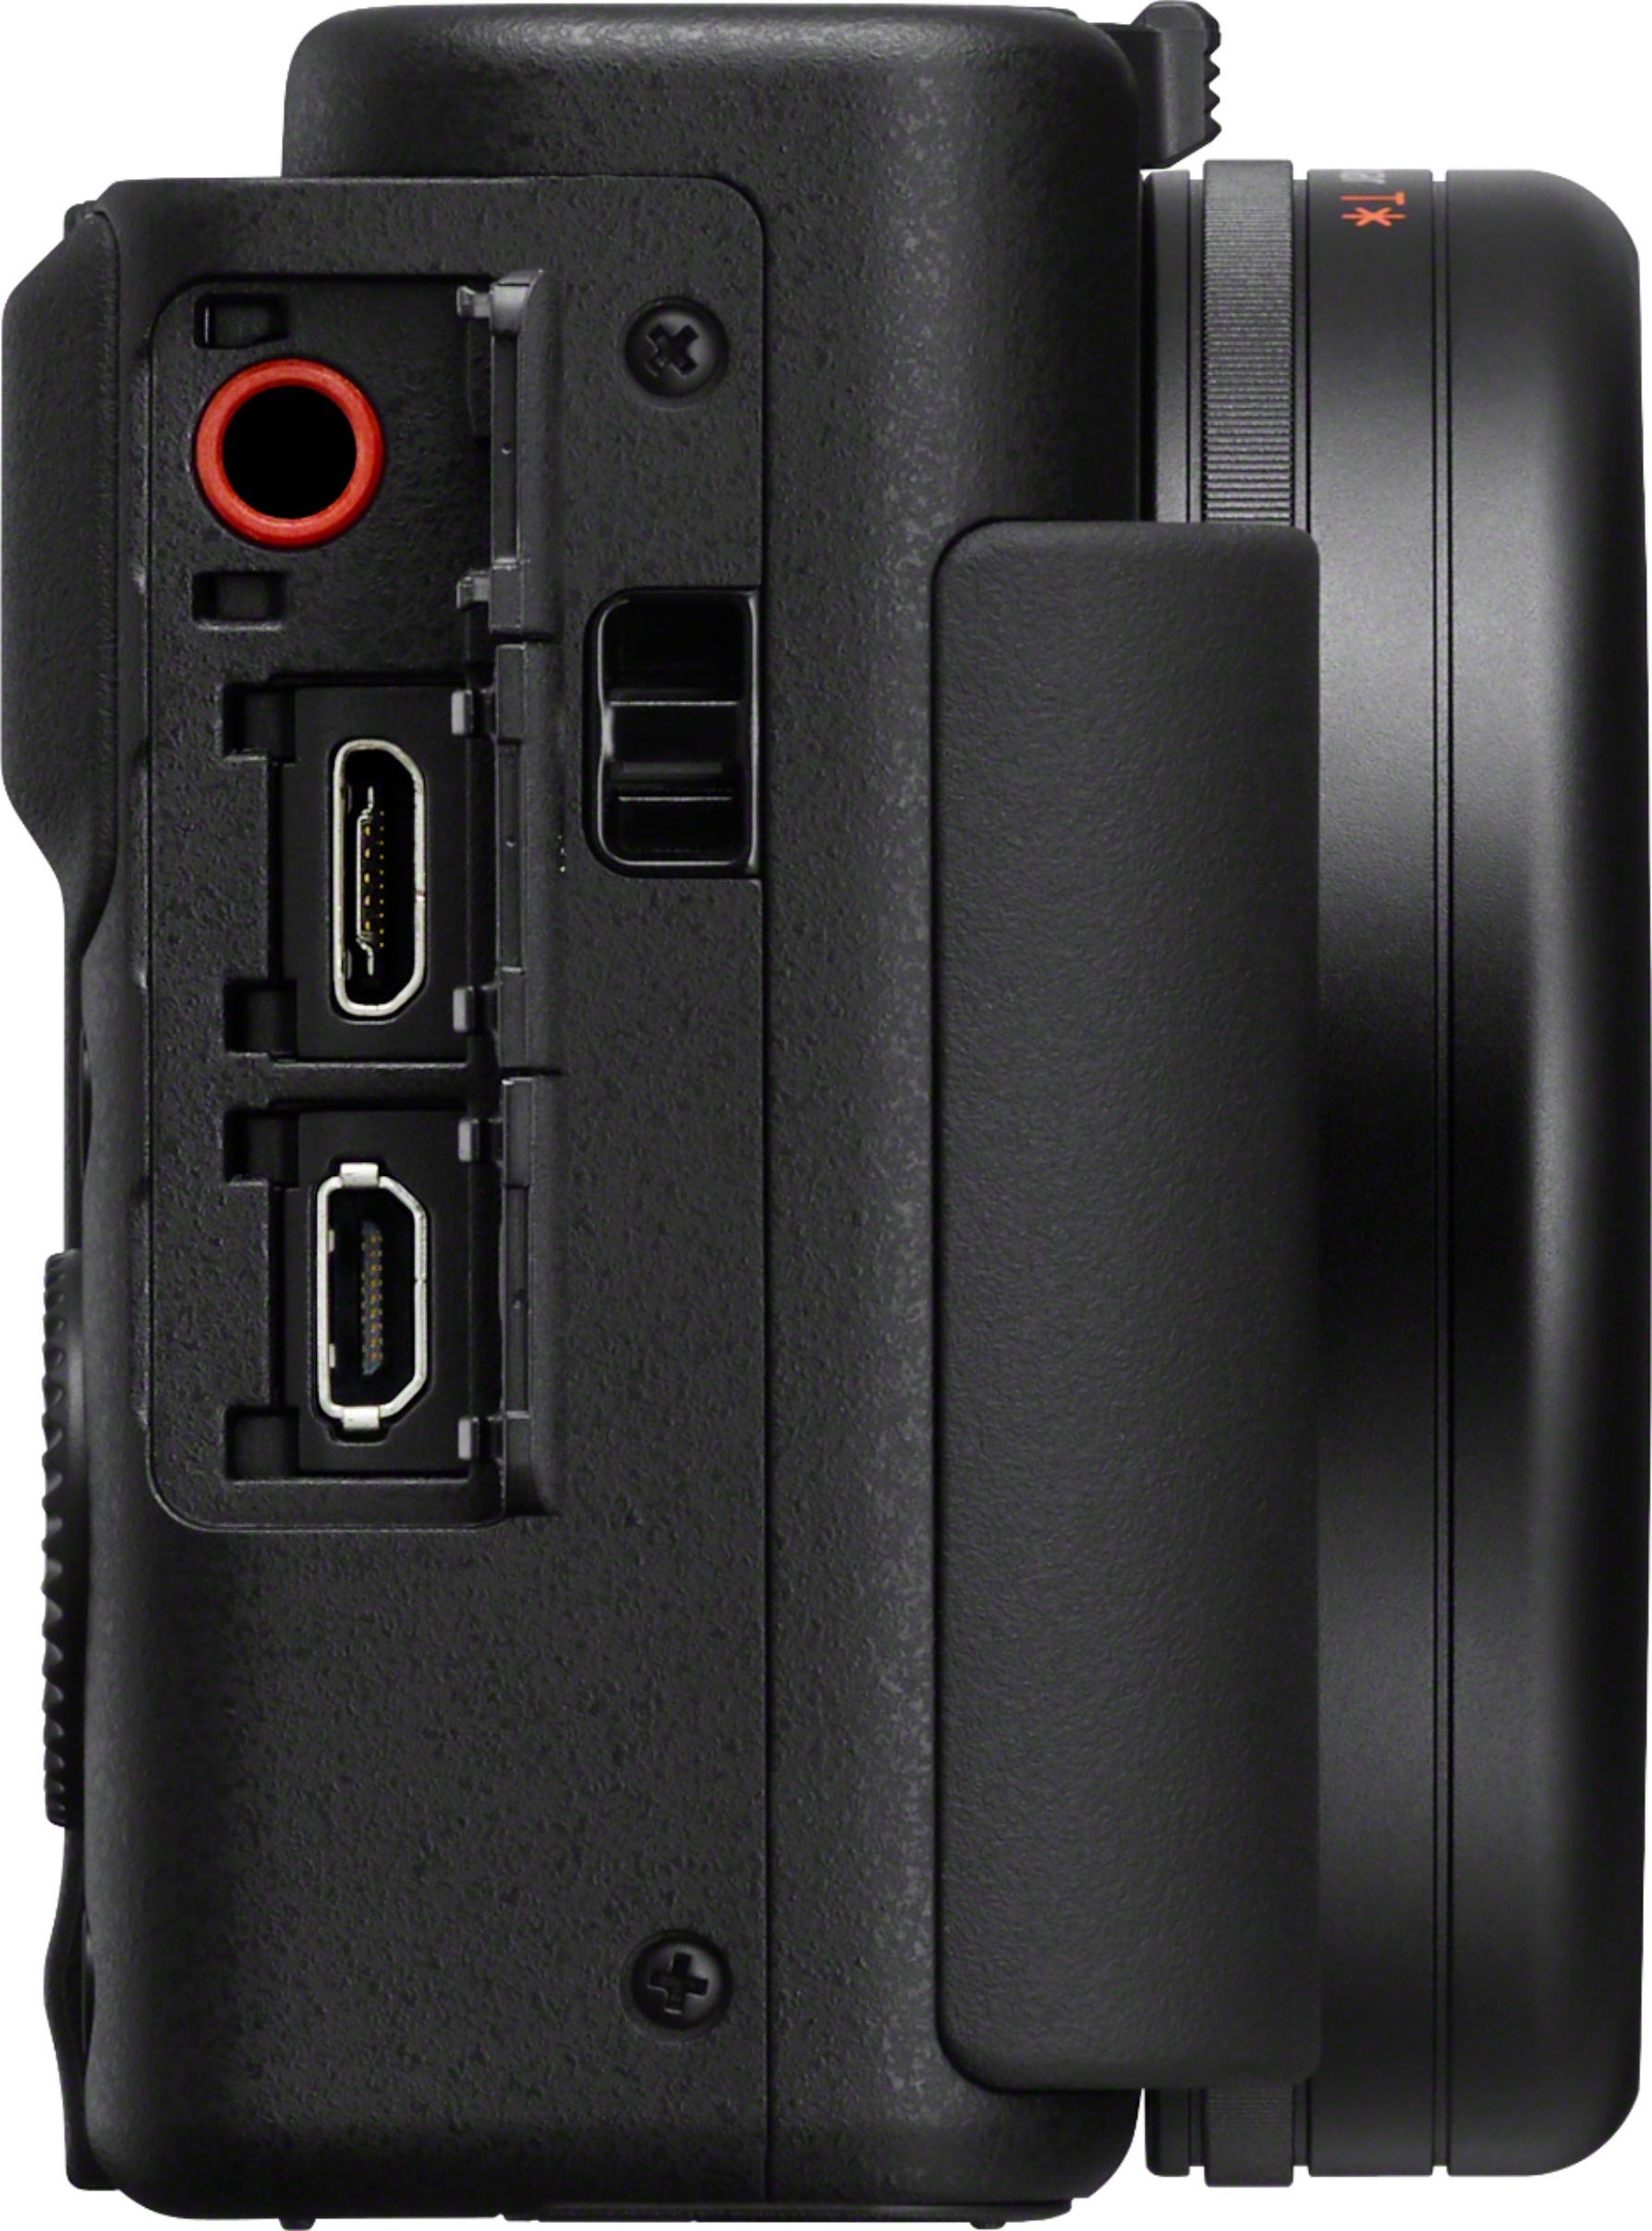 Sony ZV-1 20.1-Megapixel Digital Camera for Content Creators and 